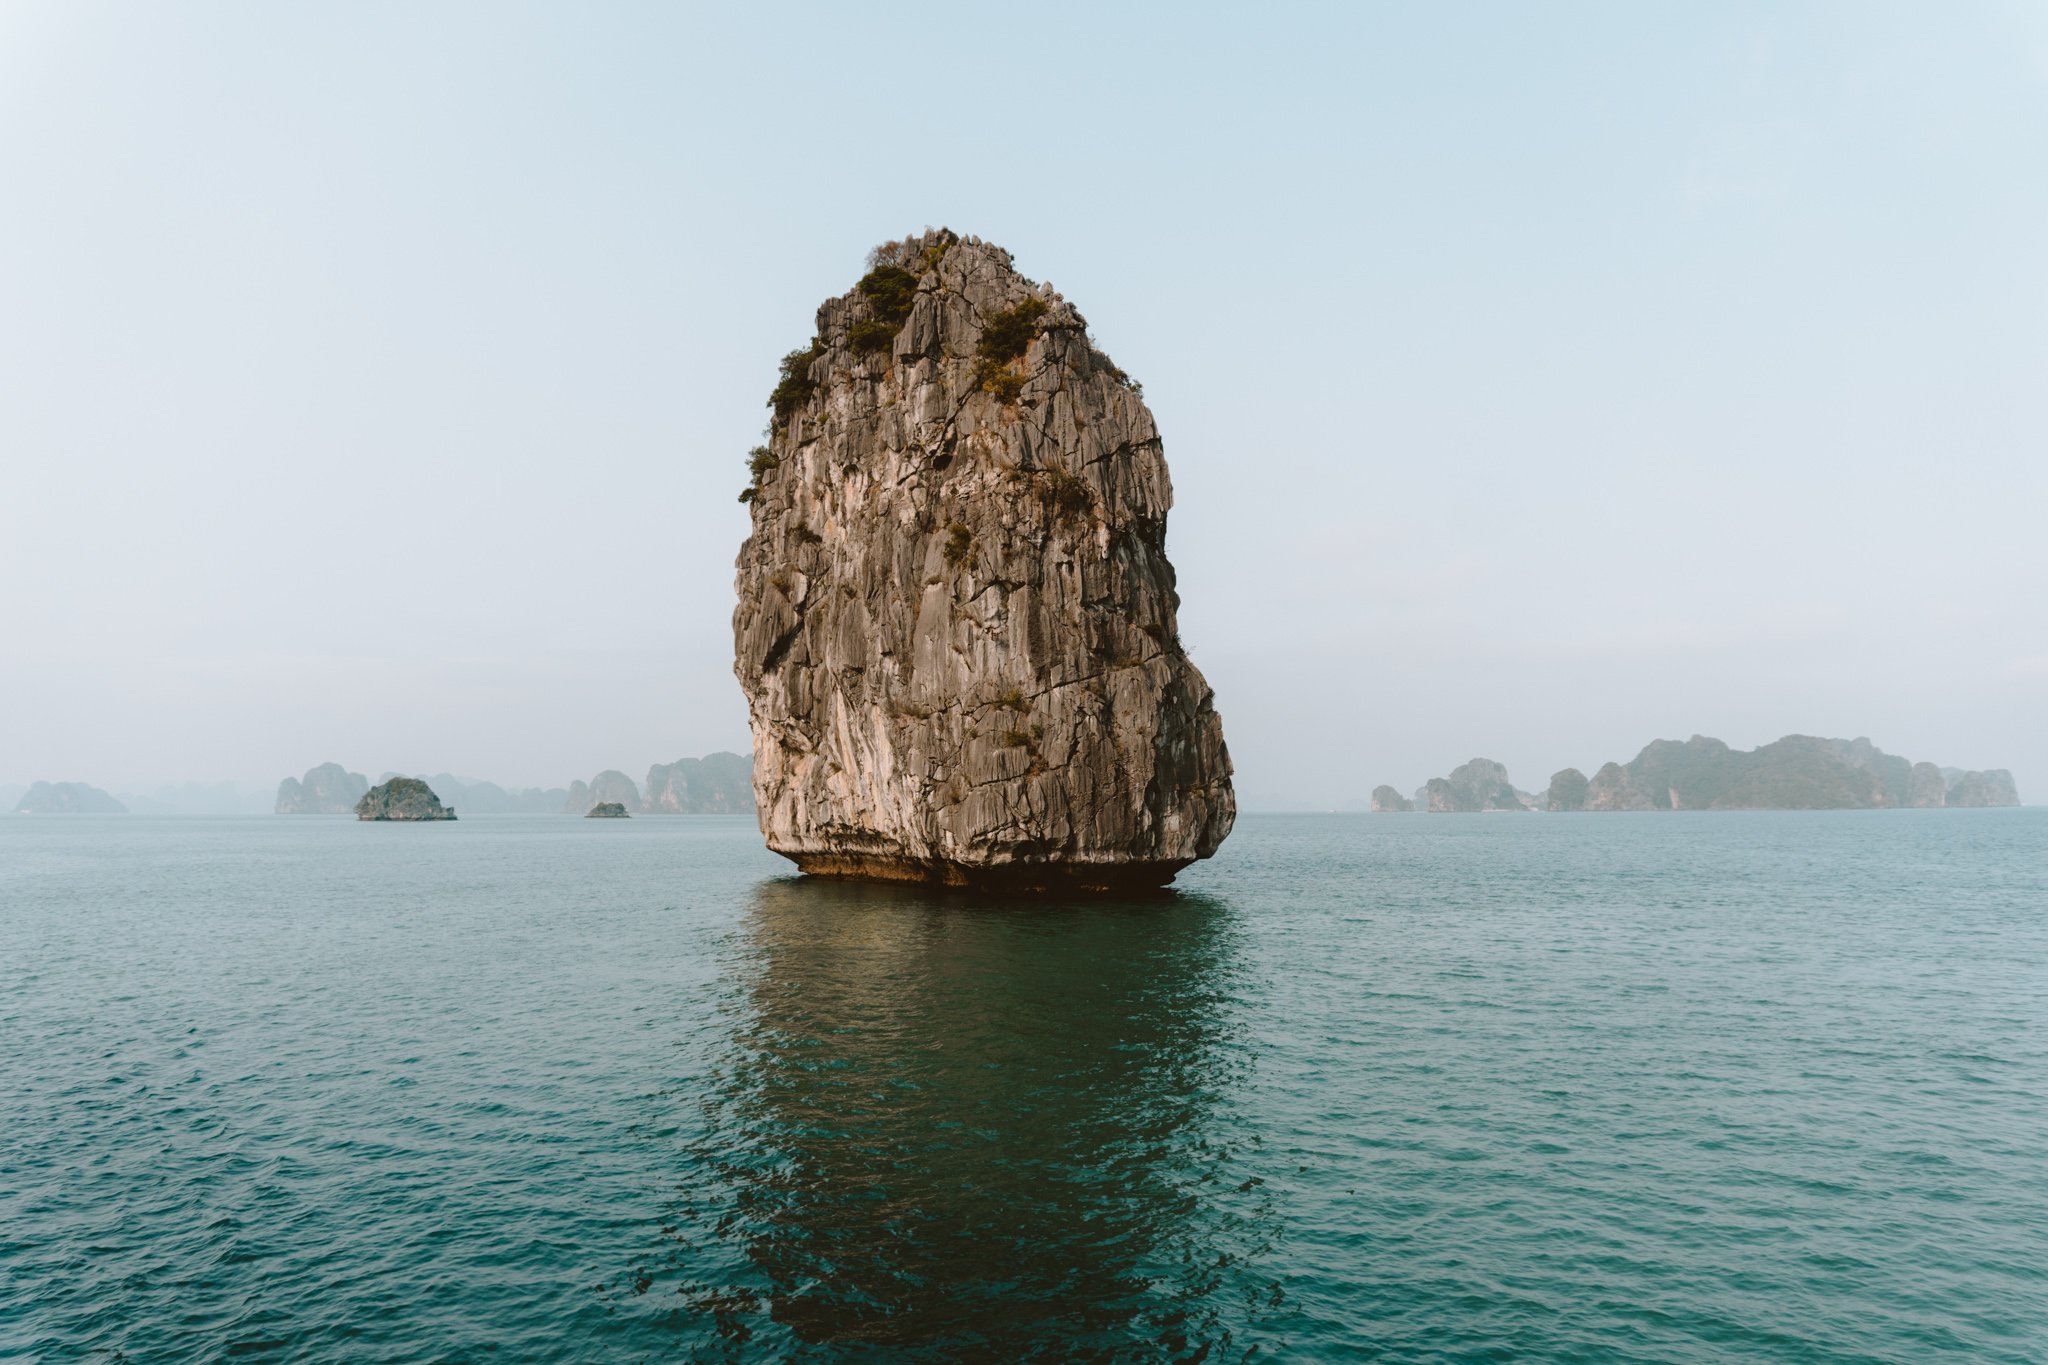 View of a single rock in the ocean, Ha Long bay, Vietnam